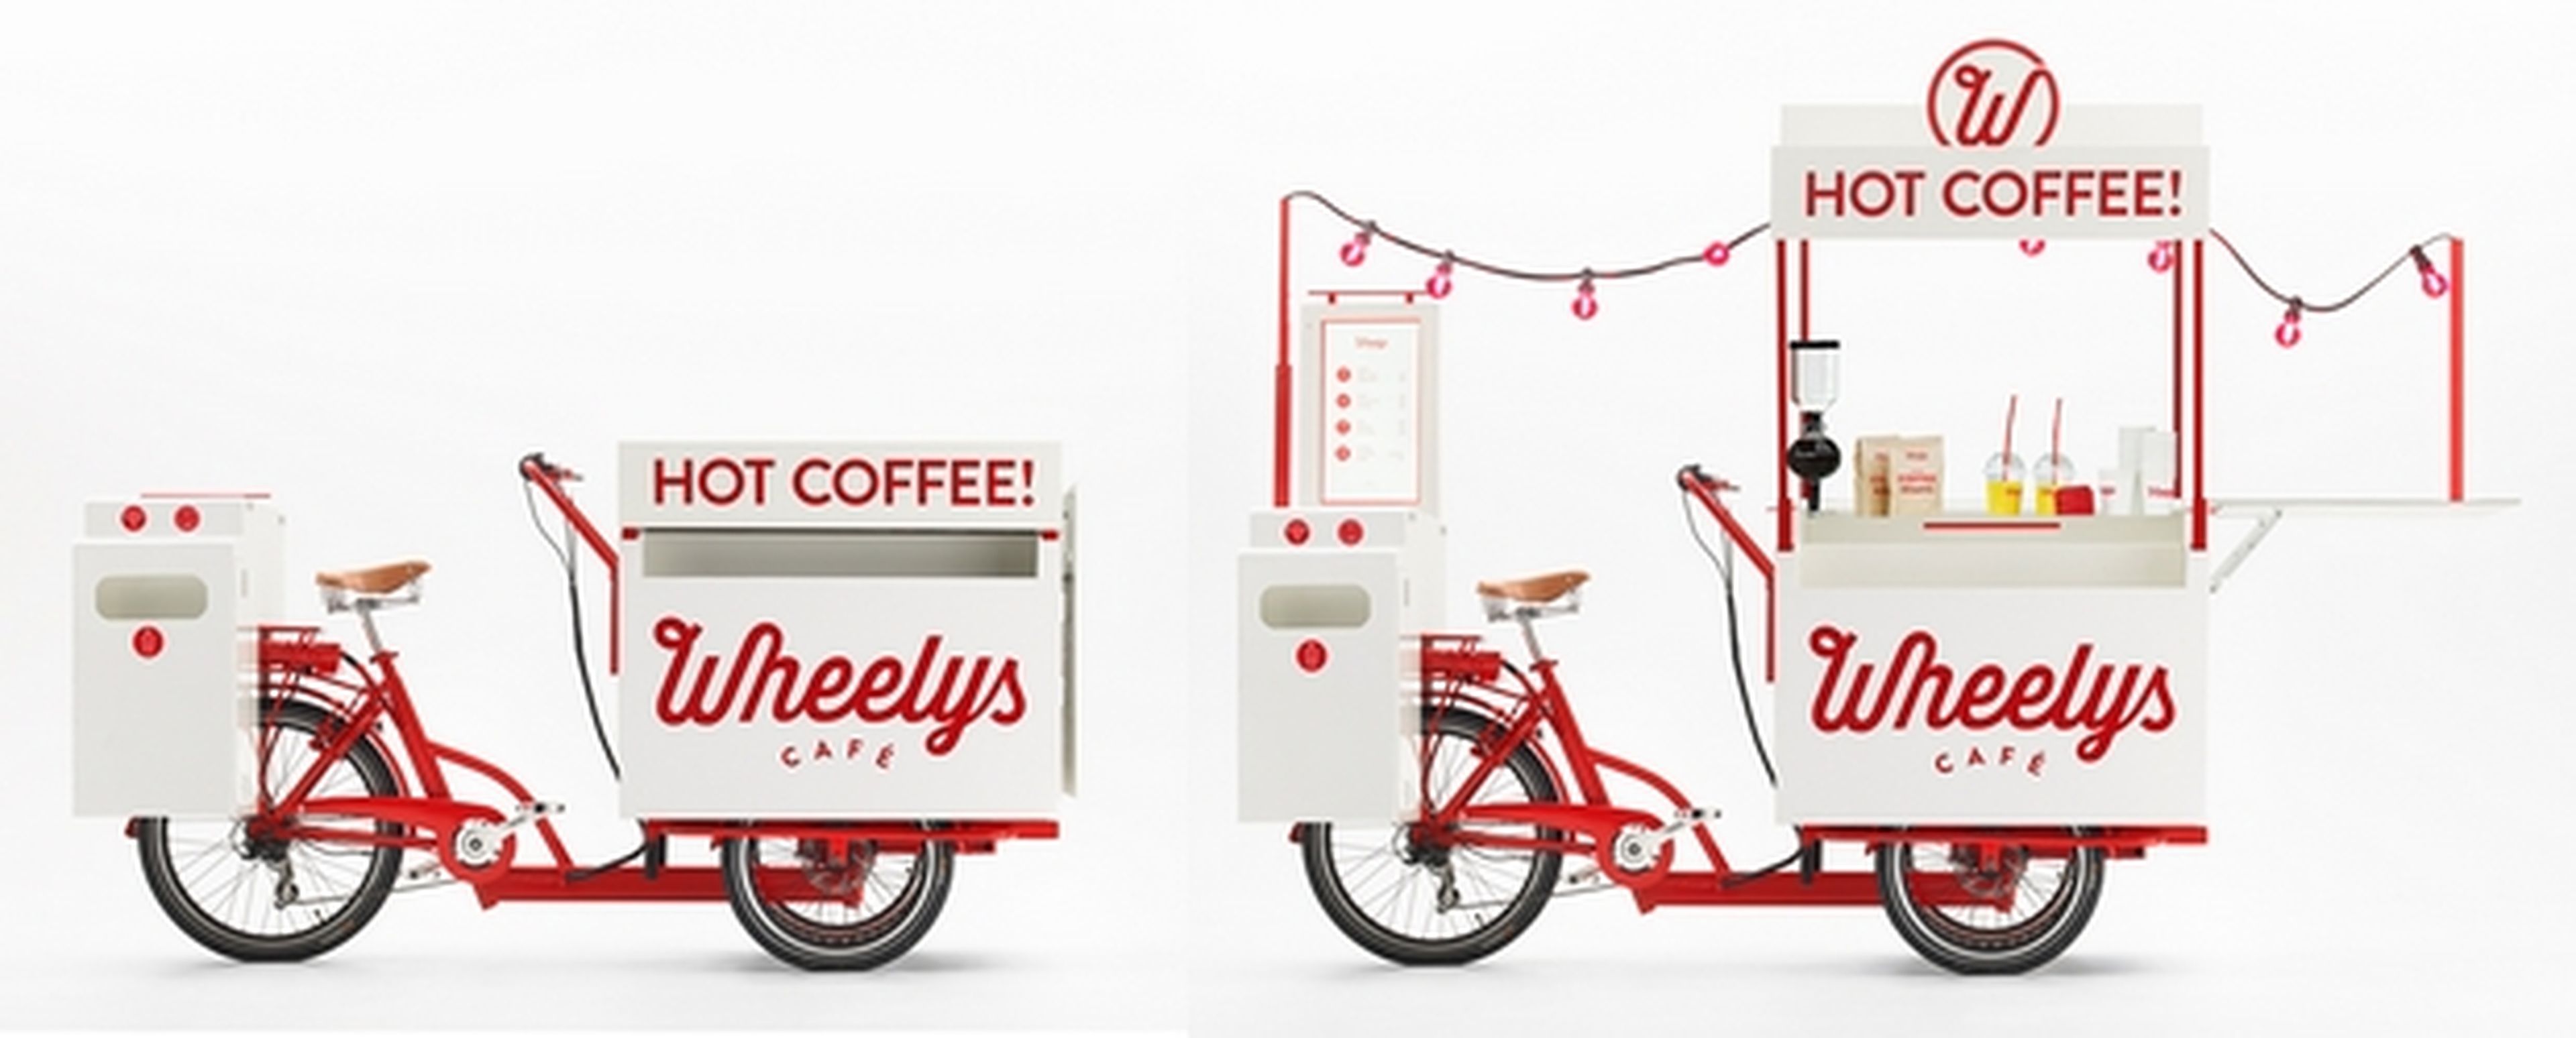 Wheelys, la bicicleta para vender café